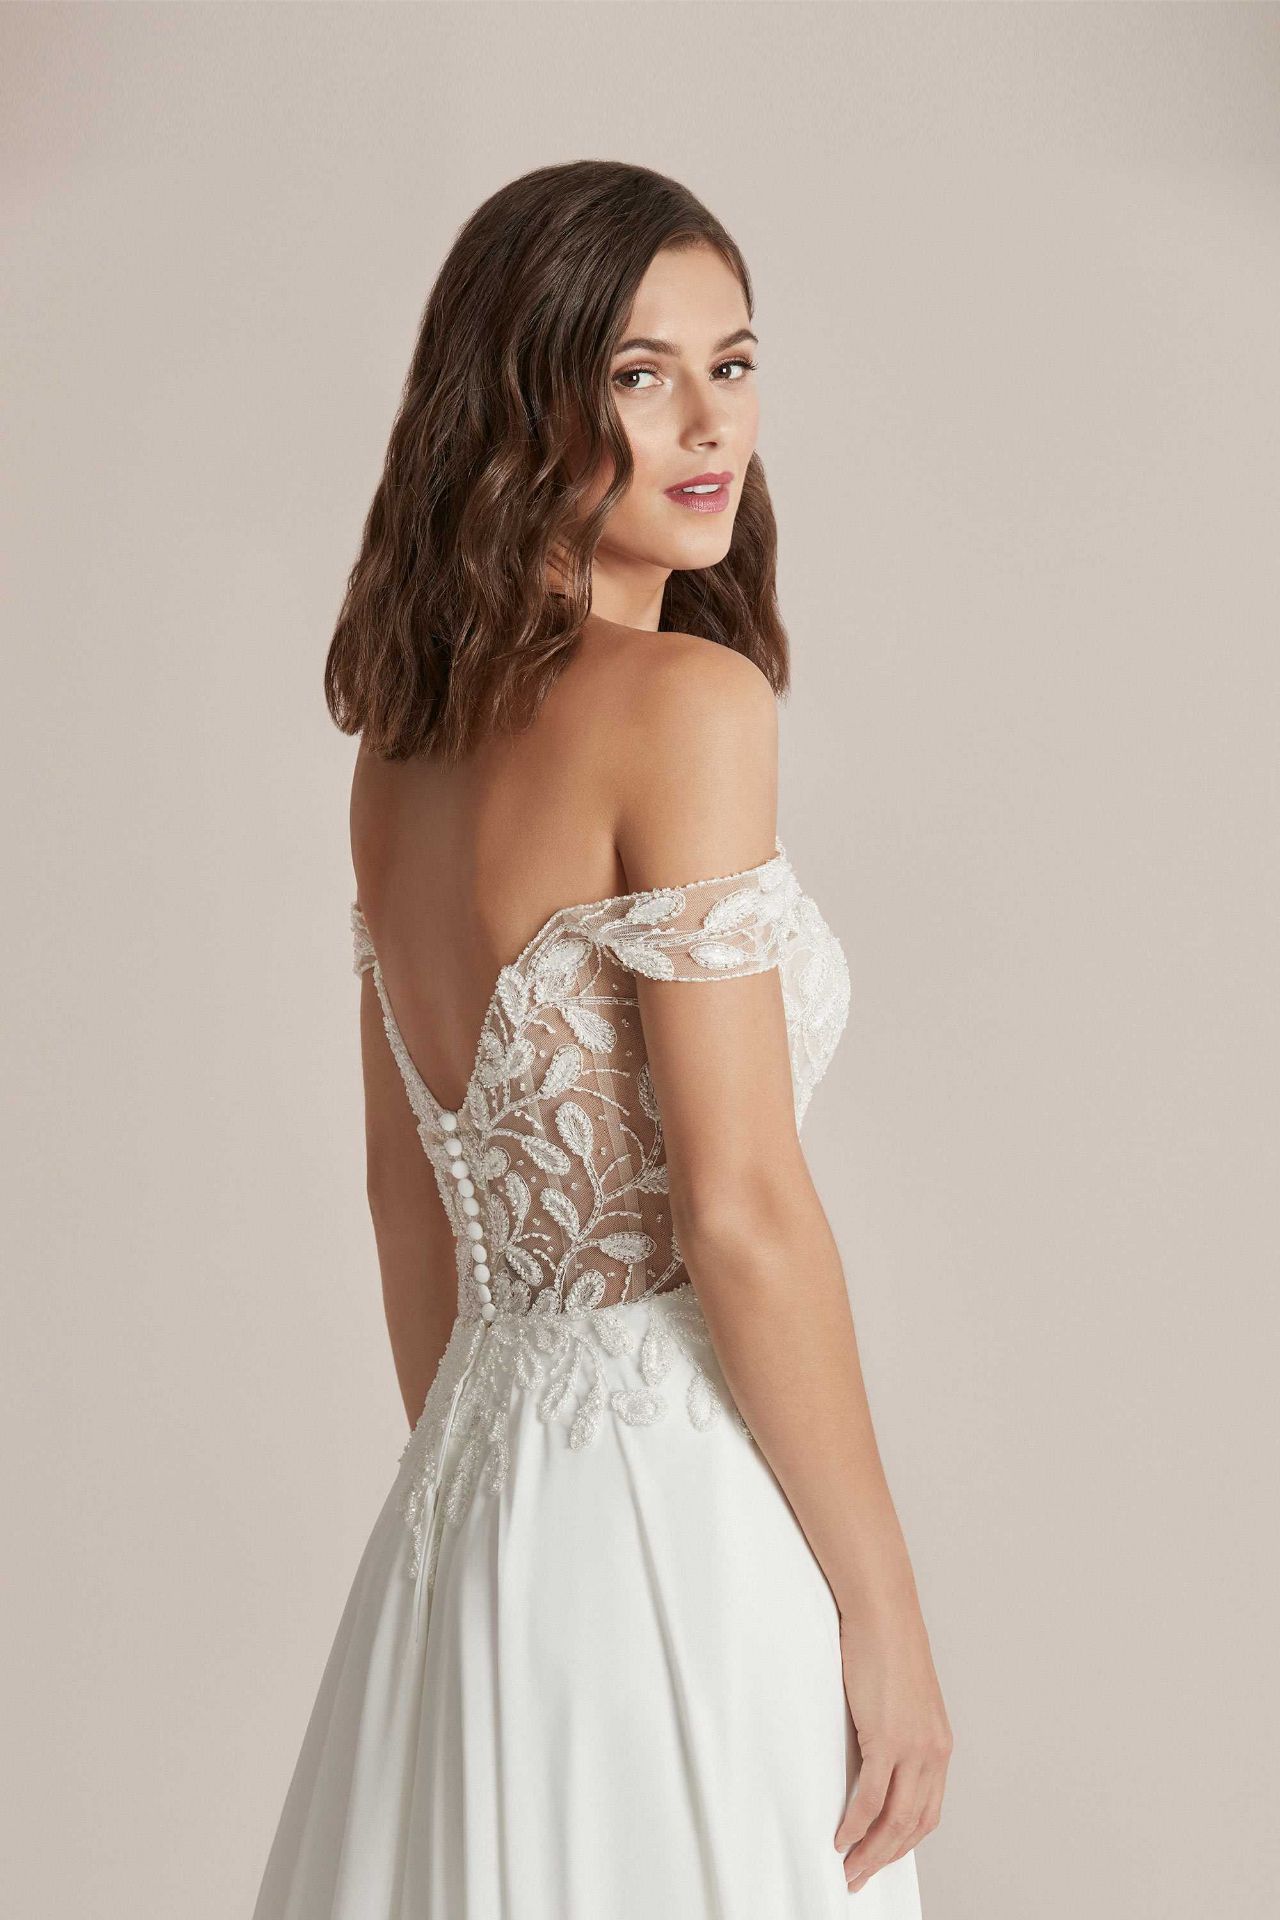 1 x Justin Alexander 'Carina' Off-The-Shoulder Chiffon A-Line Wedding Dress - Size 20 - RRP £1,675 - Image 2 of 4